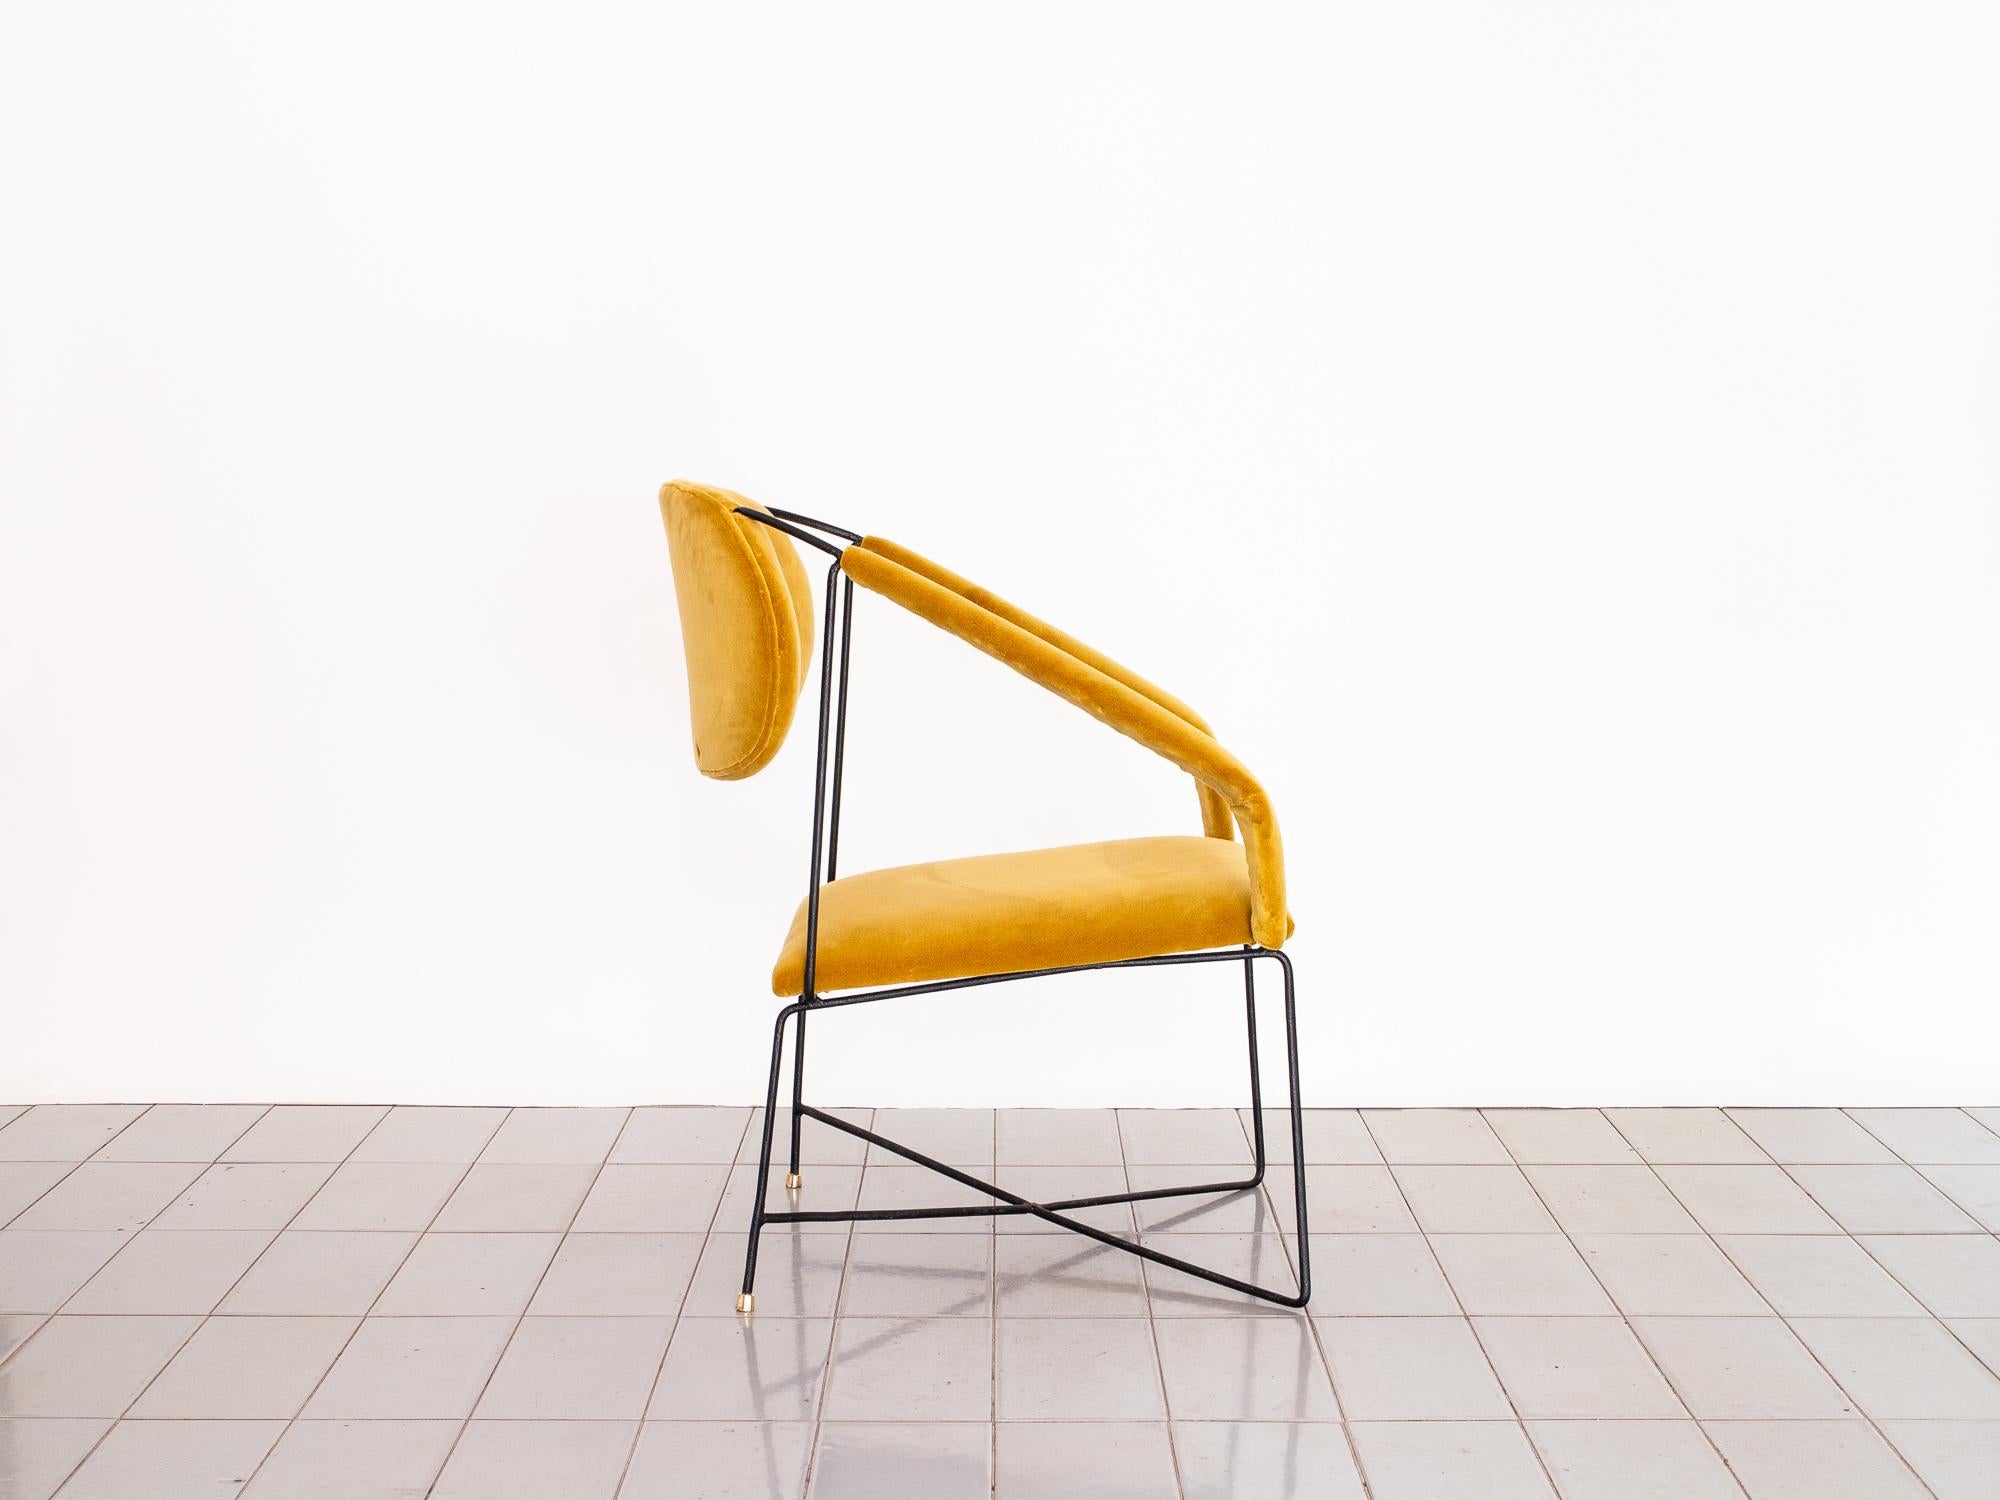 1950s Club Chair in Wrought Iron and Yellow Velvet, Brazilian Mid Century Modern (Brasilianisch)